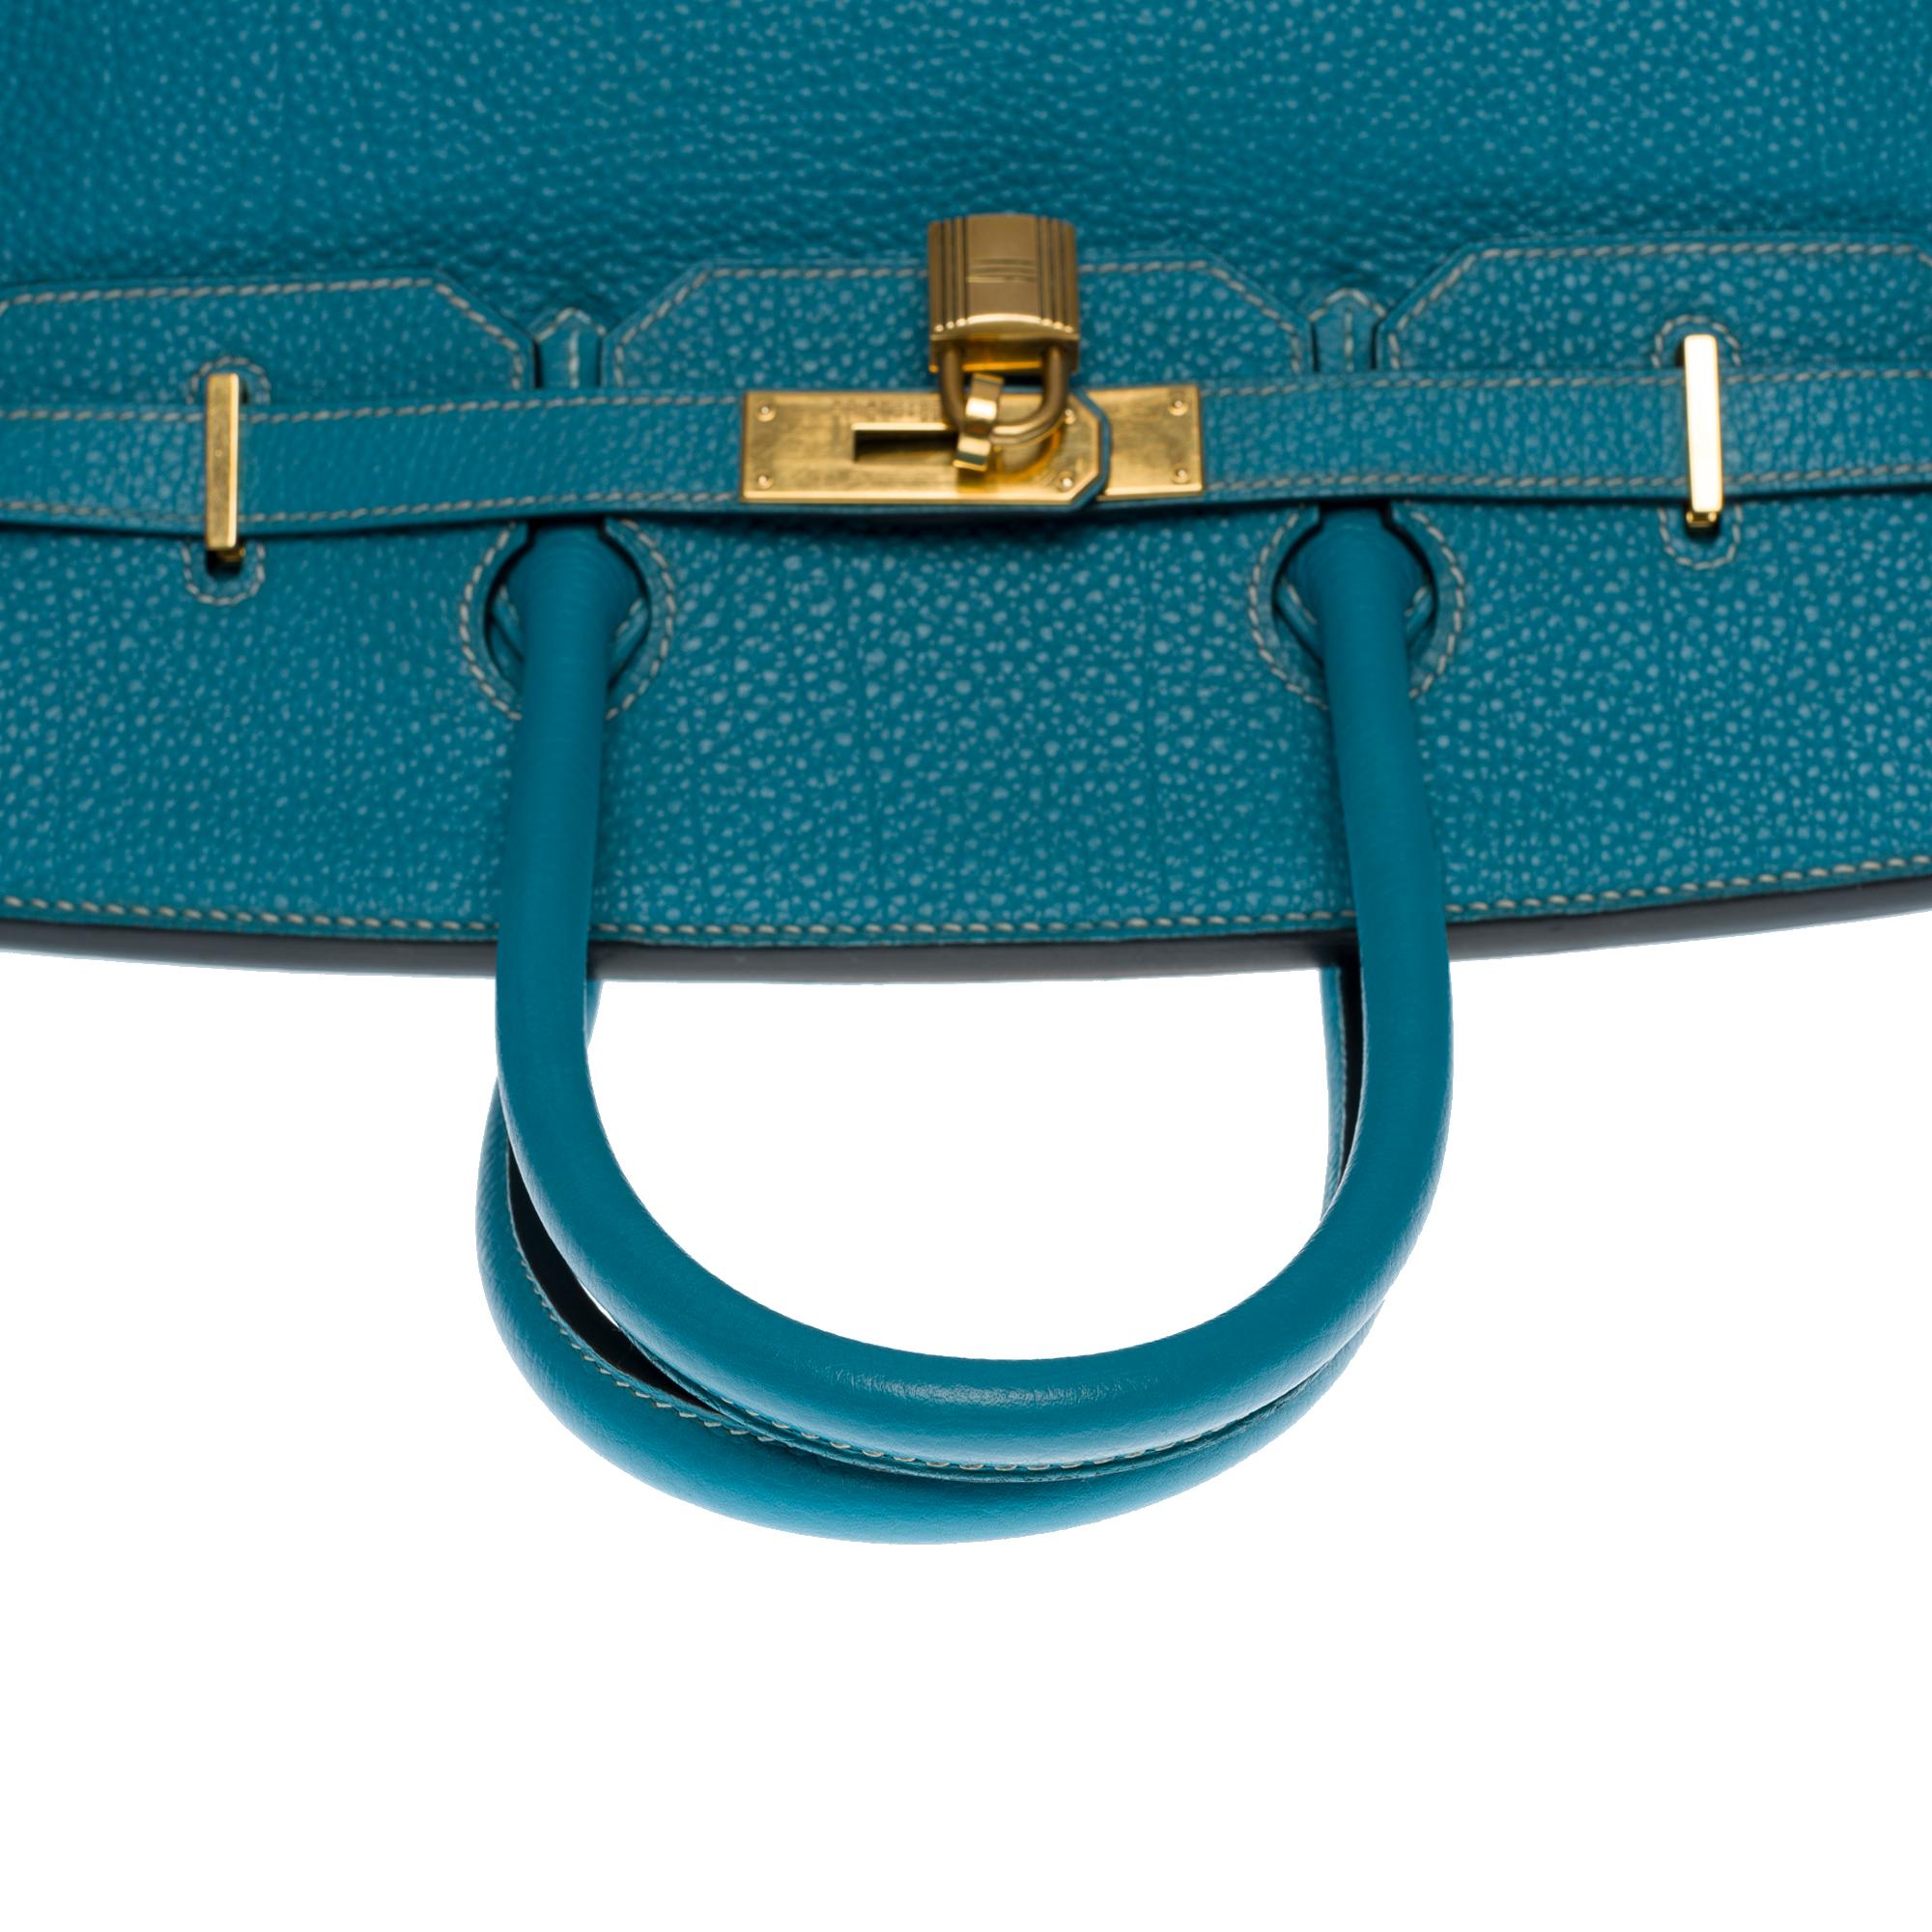 Magnificent Hermès Birkin 35 handbag in Bleu Saint-Cyr Togo leather, GHW 3